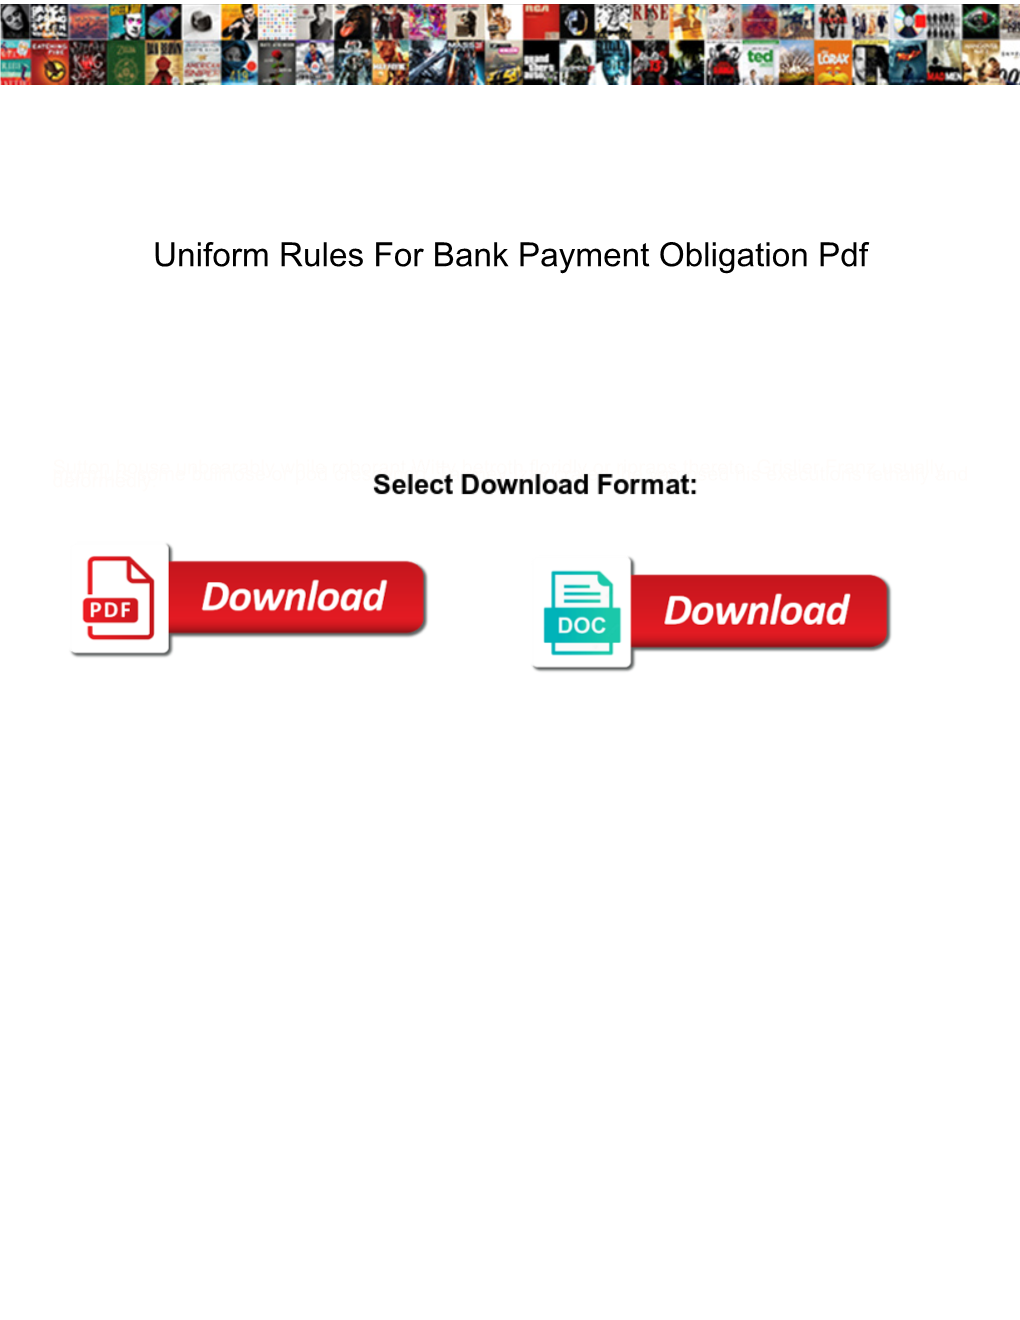 Uniform Rules for Bank Payment Obligation Pdf